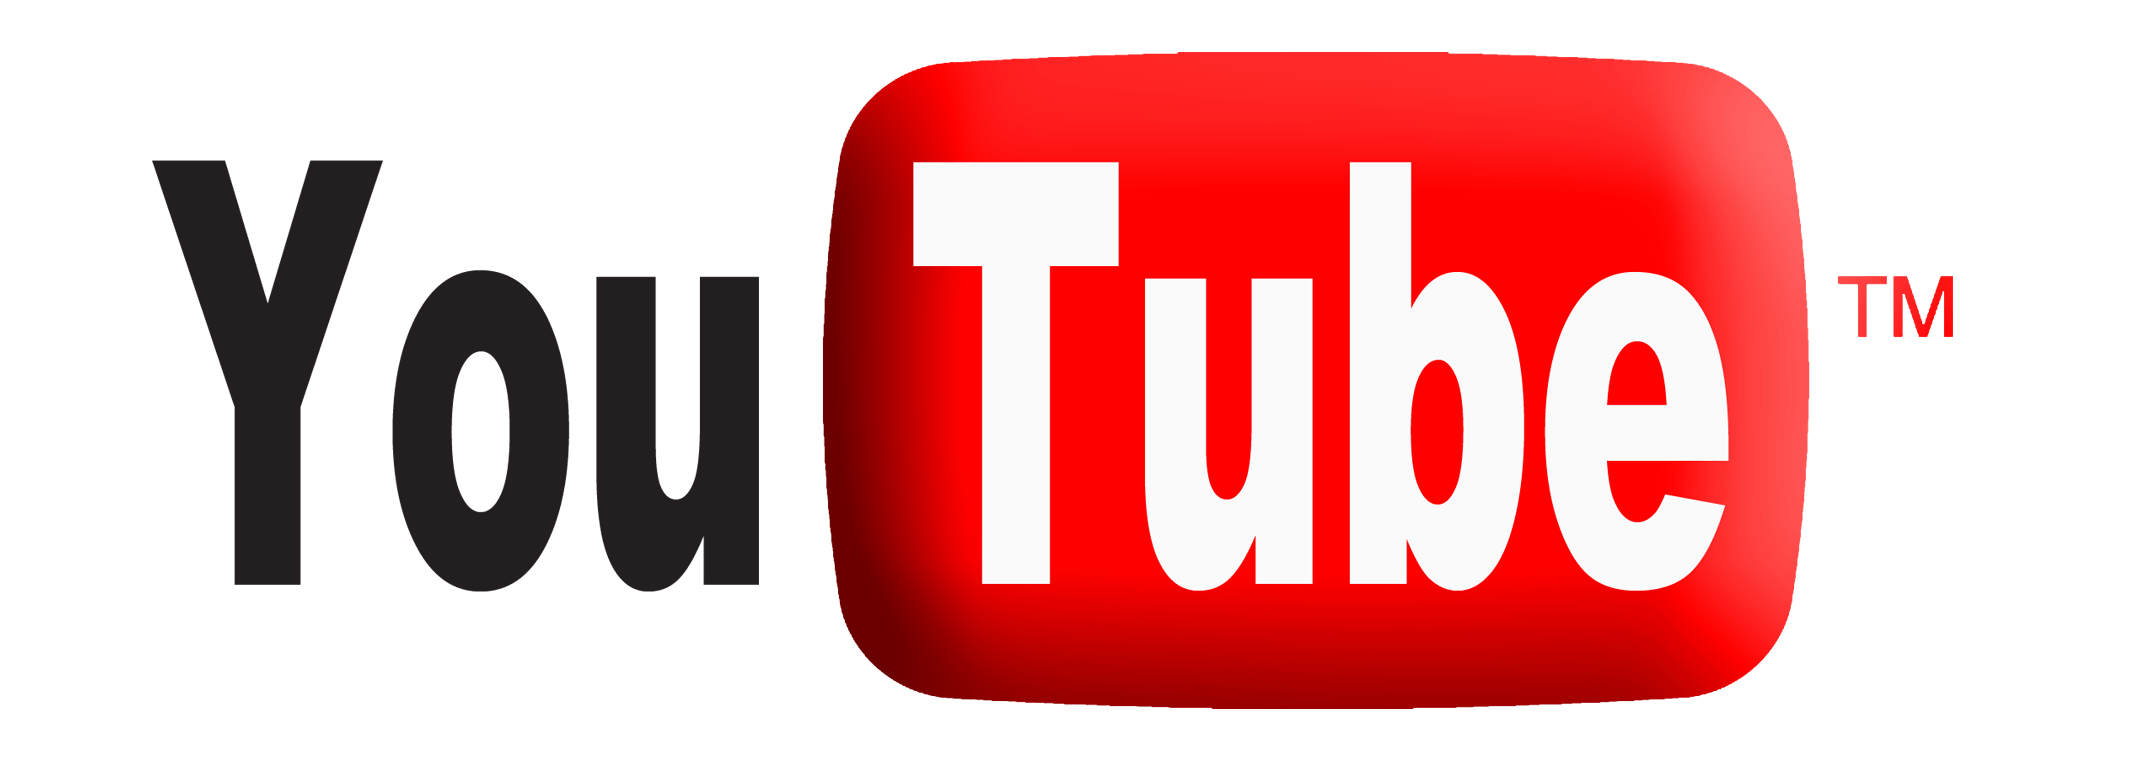 2016 New YouTube Logo - YouTube Logo PNG Transparent Background - Famous Logos